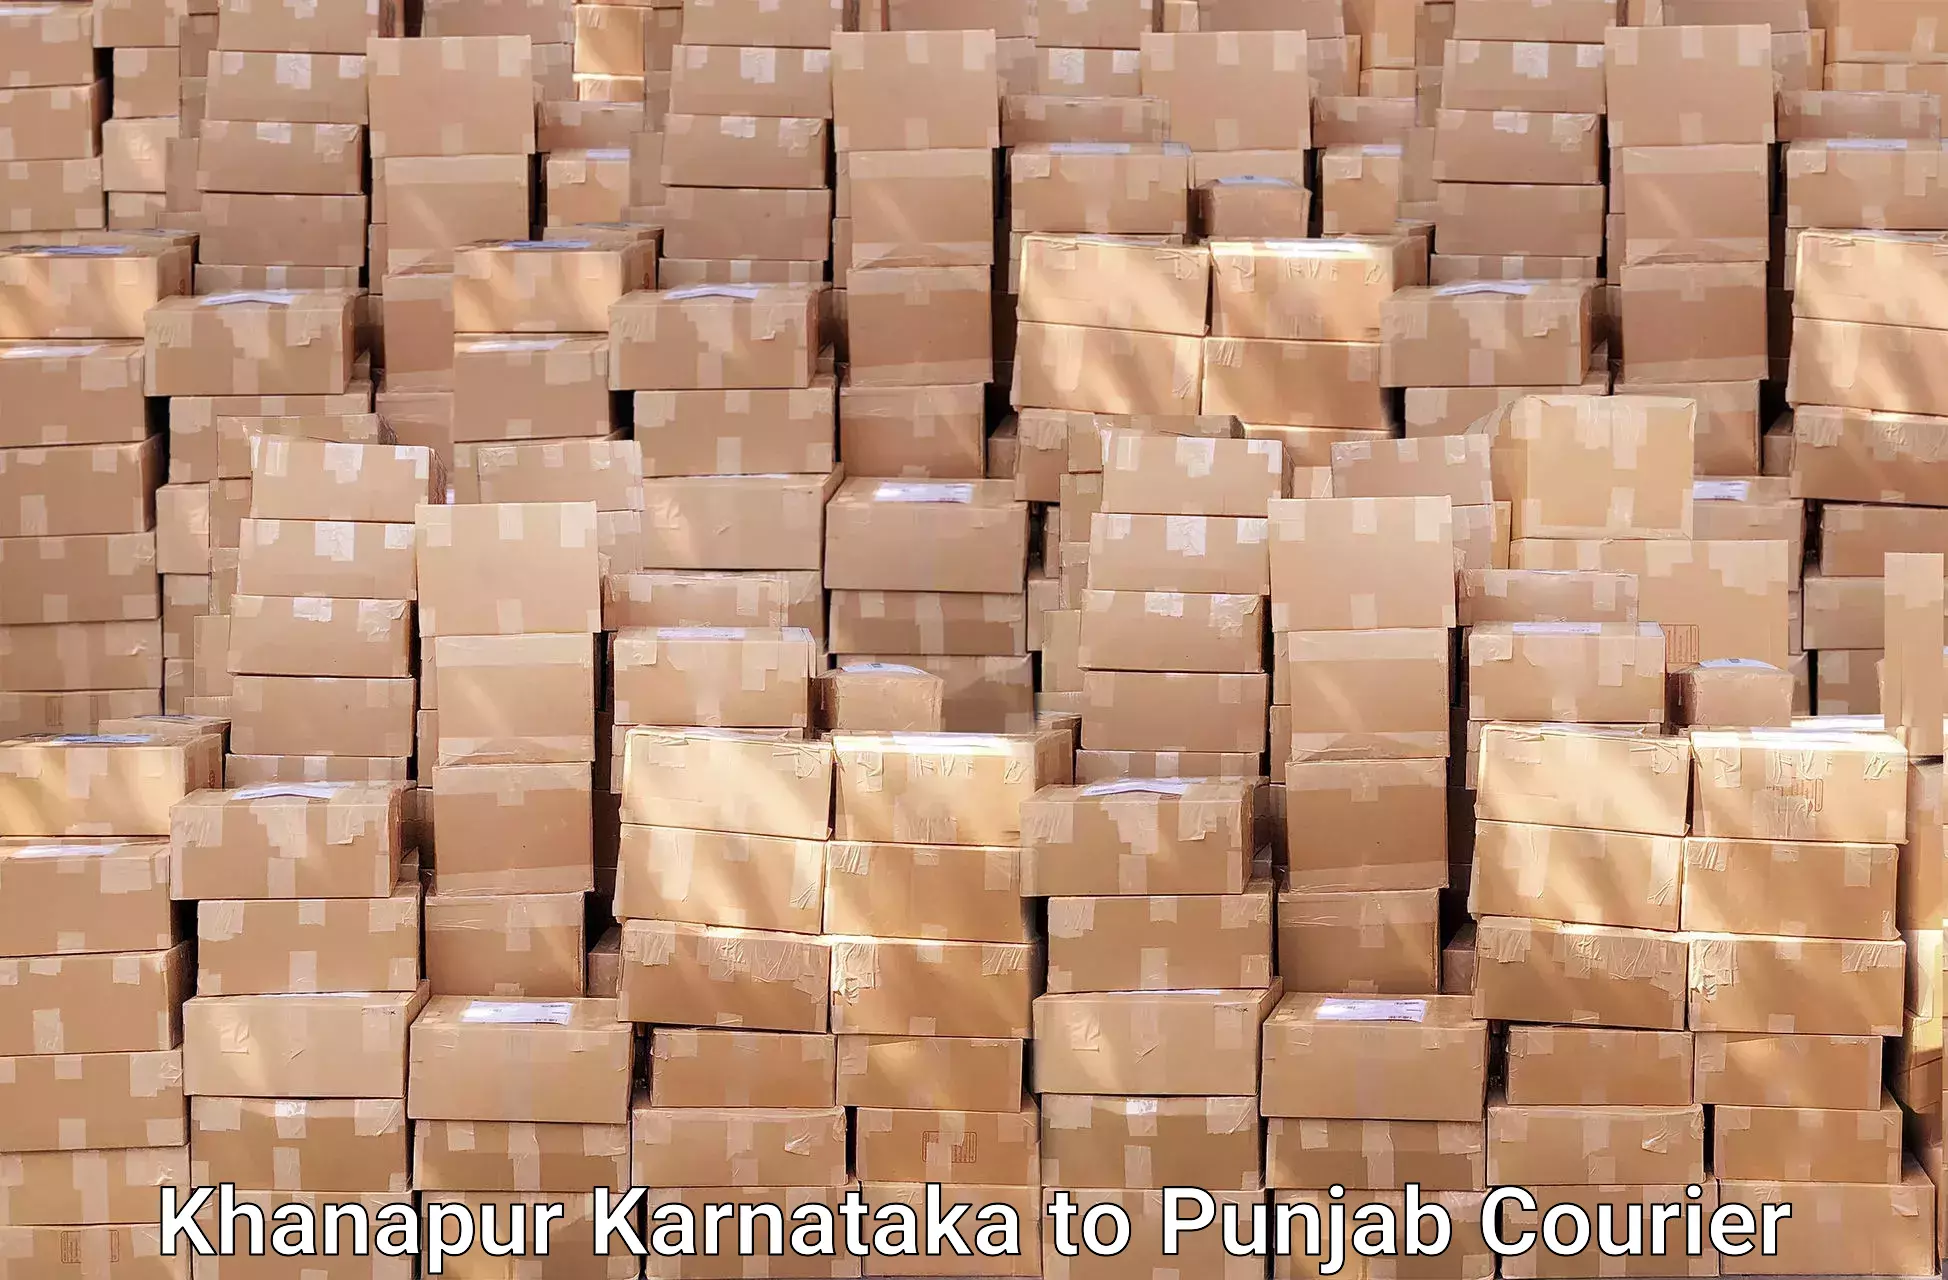 Reliable moving assistance Khanapur Karnataka to Dera Bassi